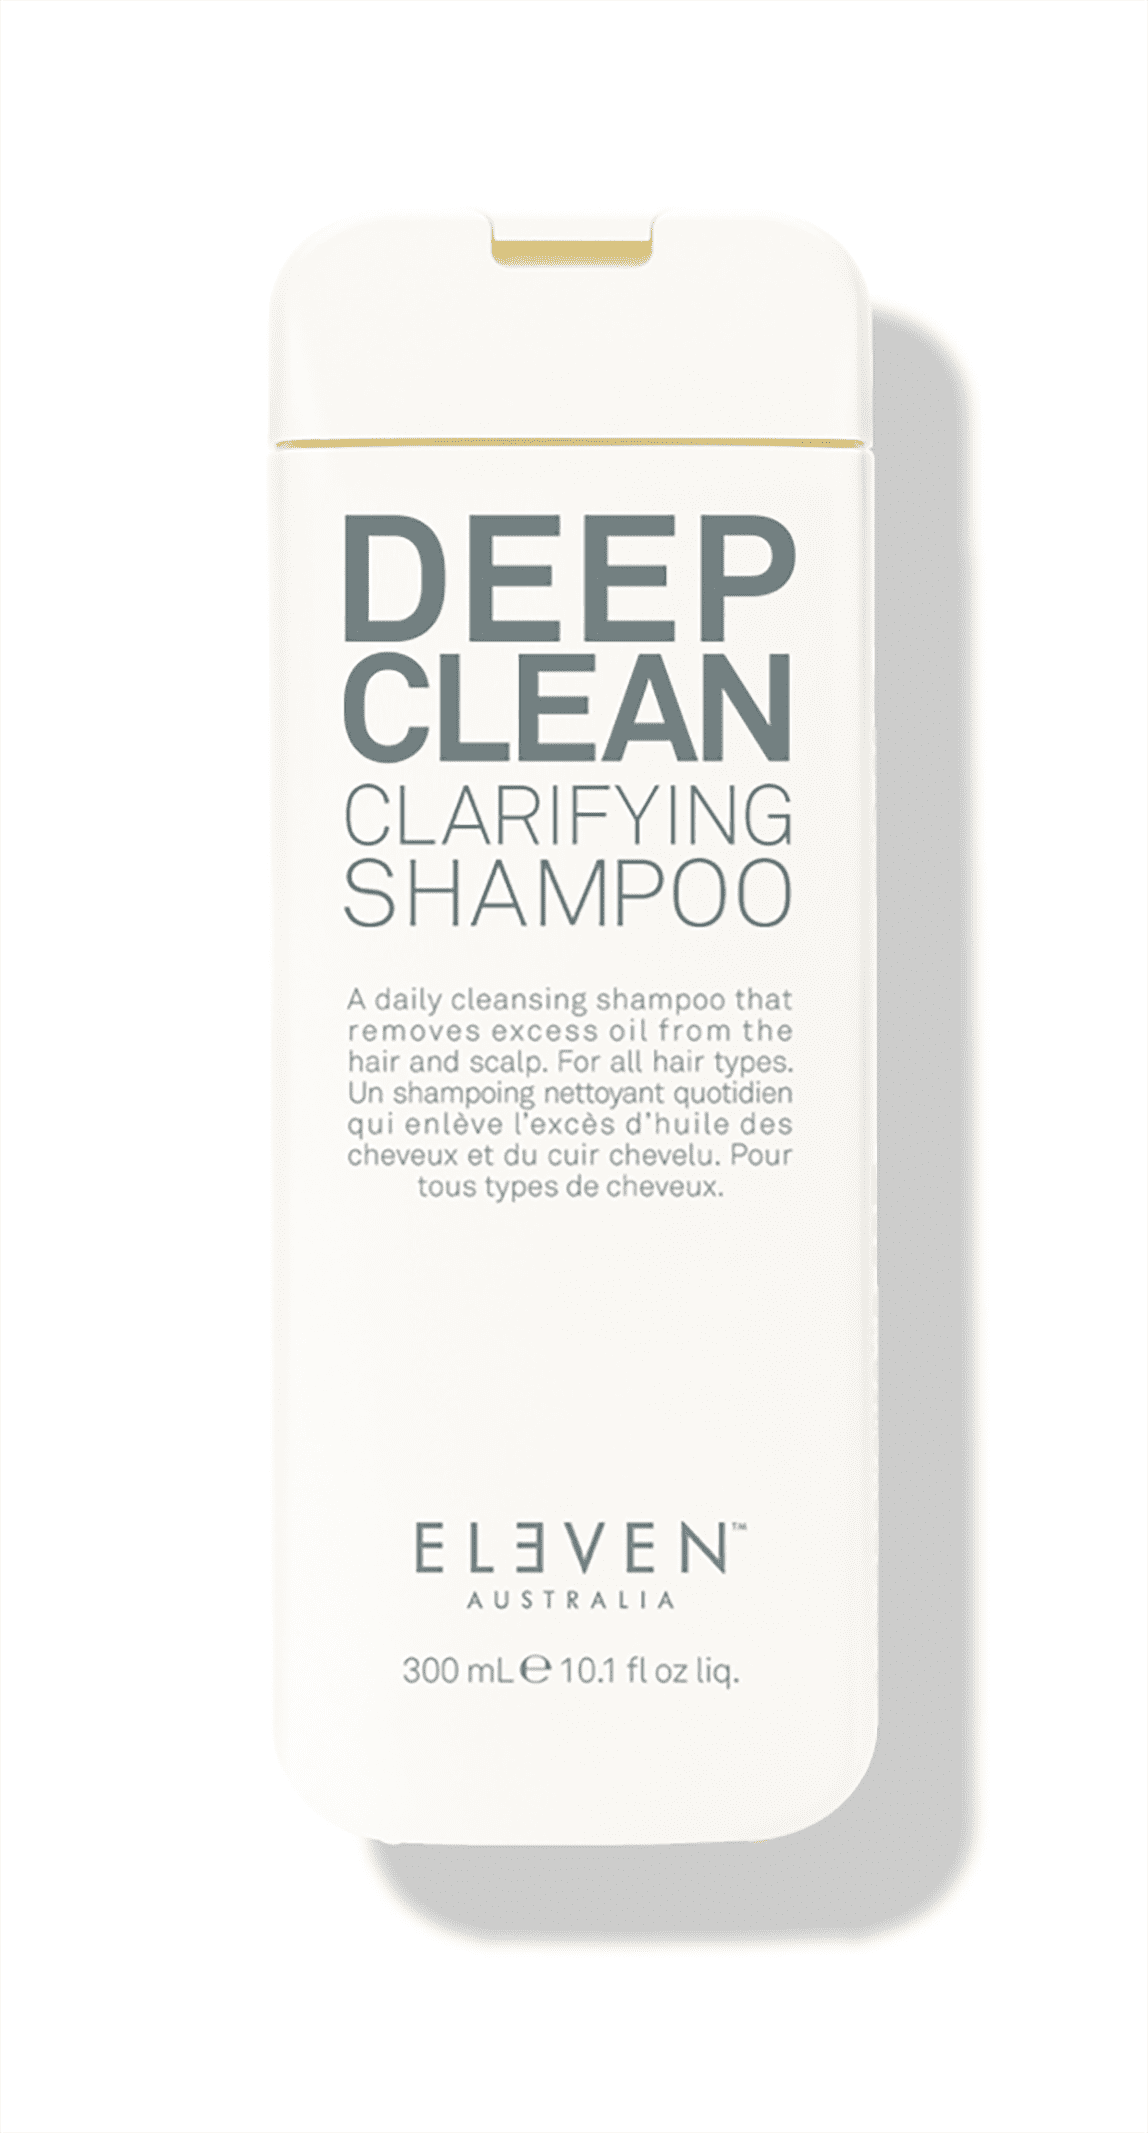 Deep Clean Clarifying Shampoo - 300ml - ELEVEN Australia